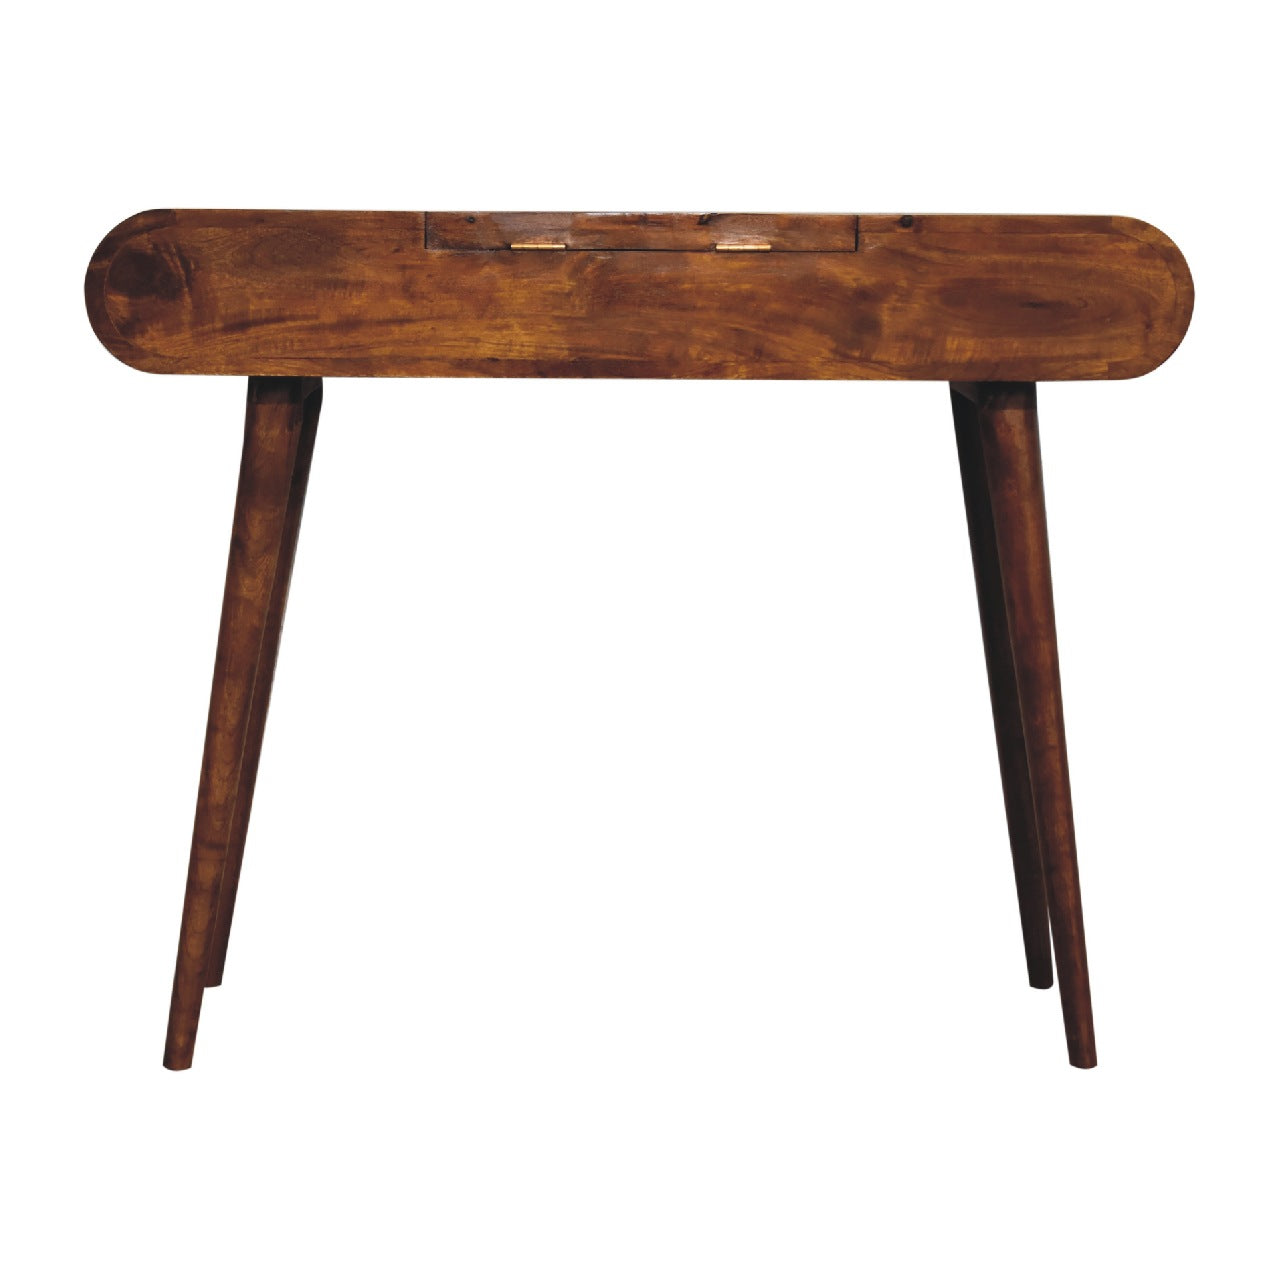 Newton handmade solid wood 3 drawer dressing table with foldable mirror in deep chestnut finish | malltandplane.com